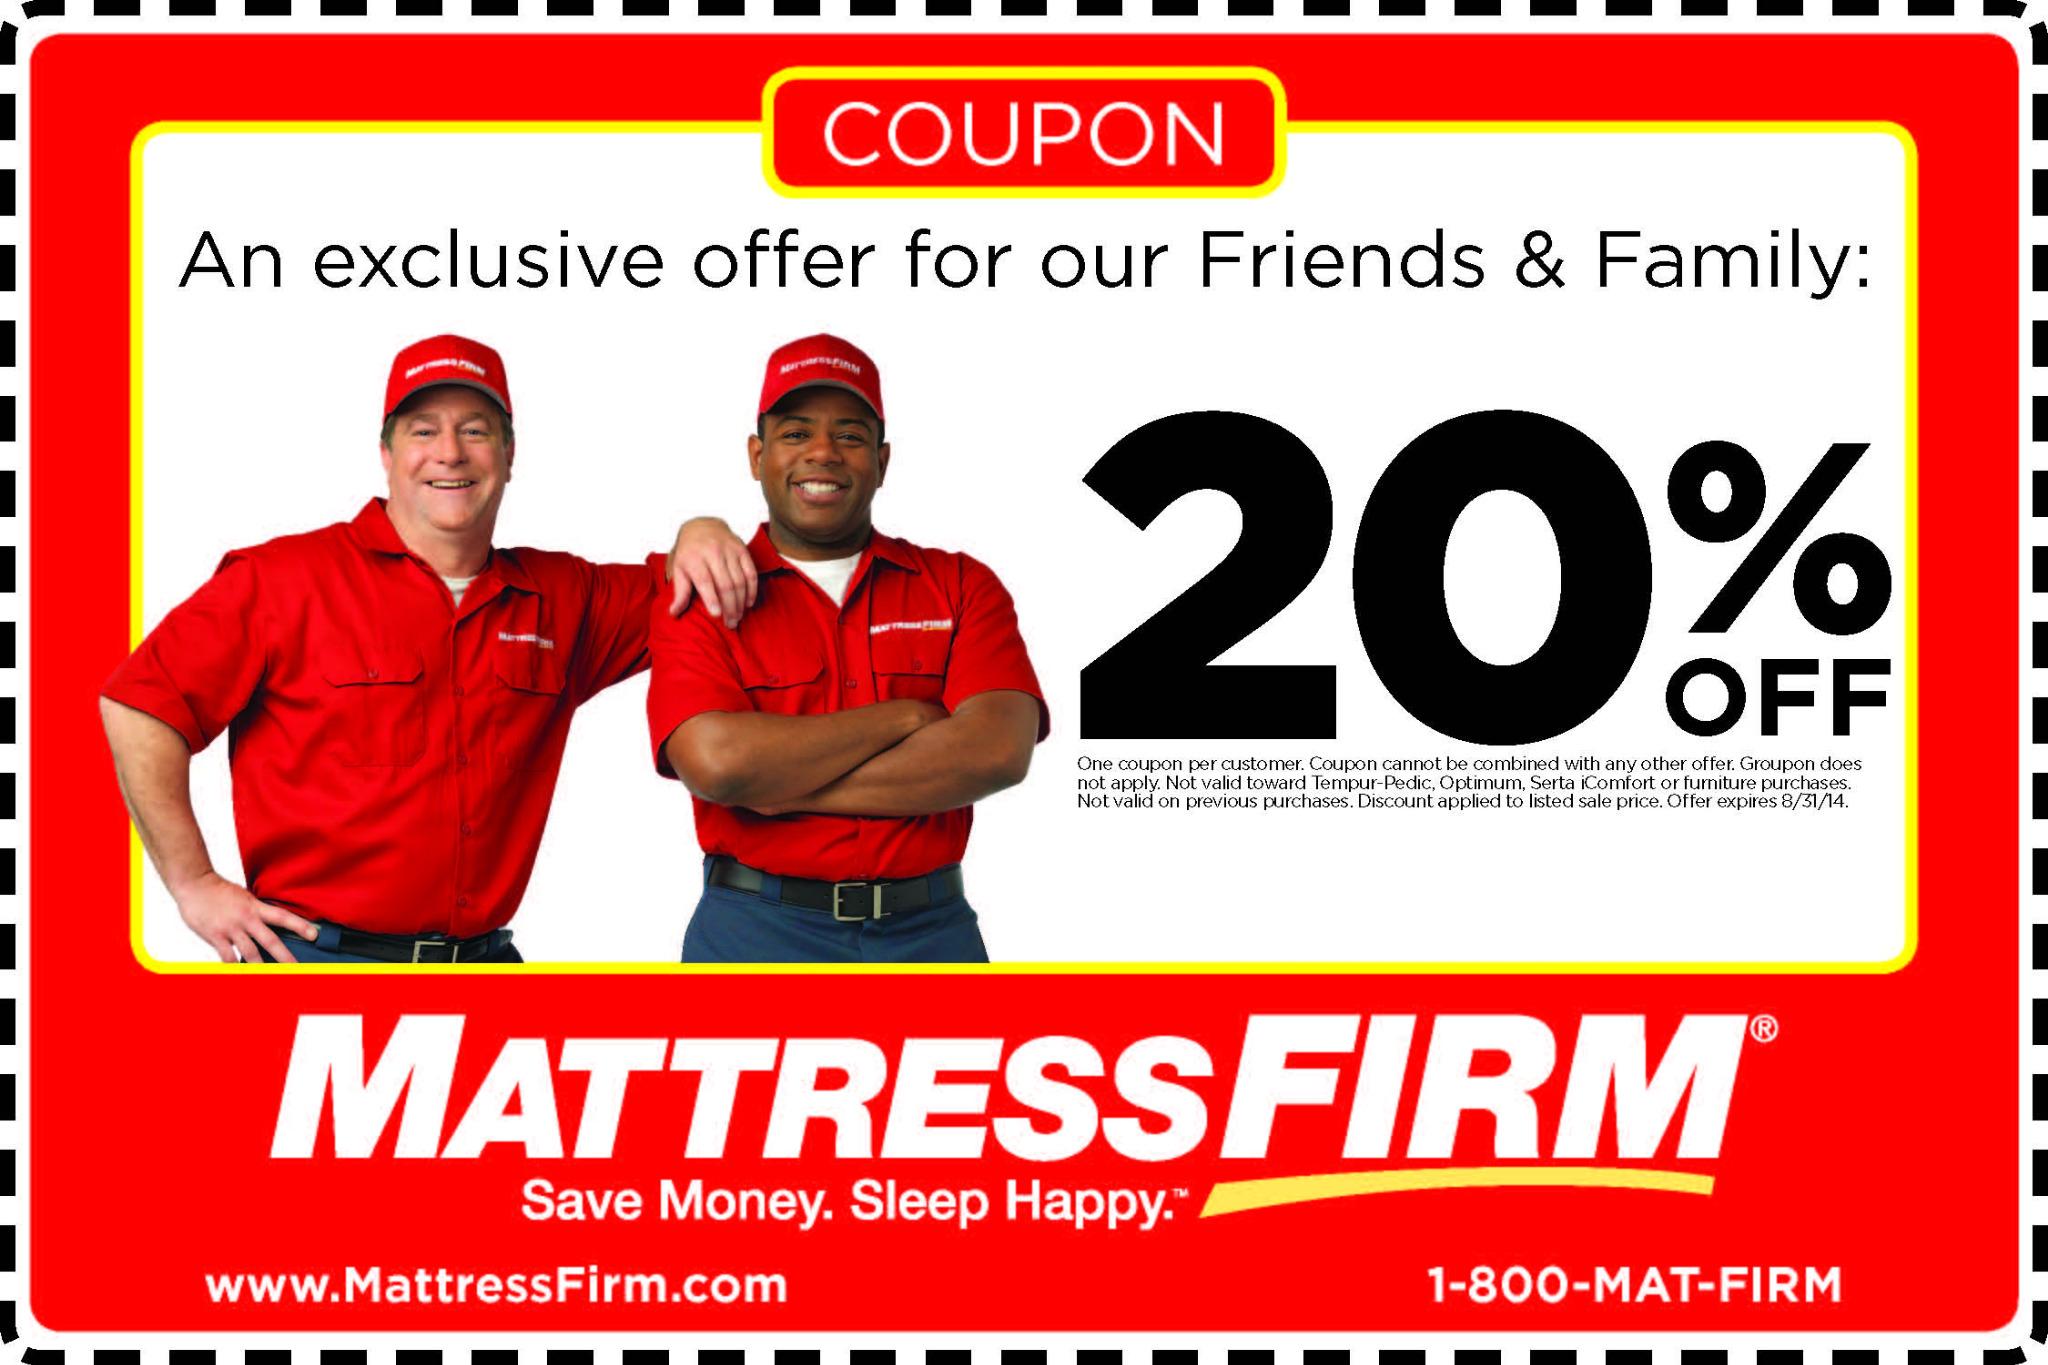 mattress firm coupons 50 off